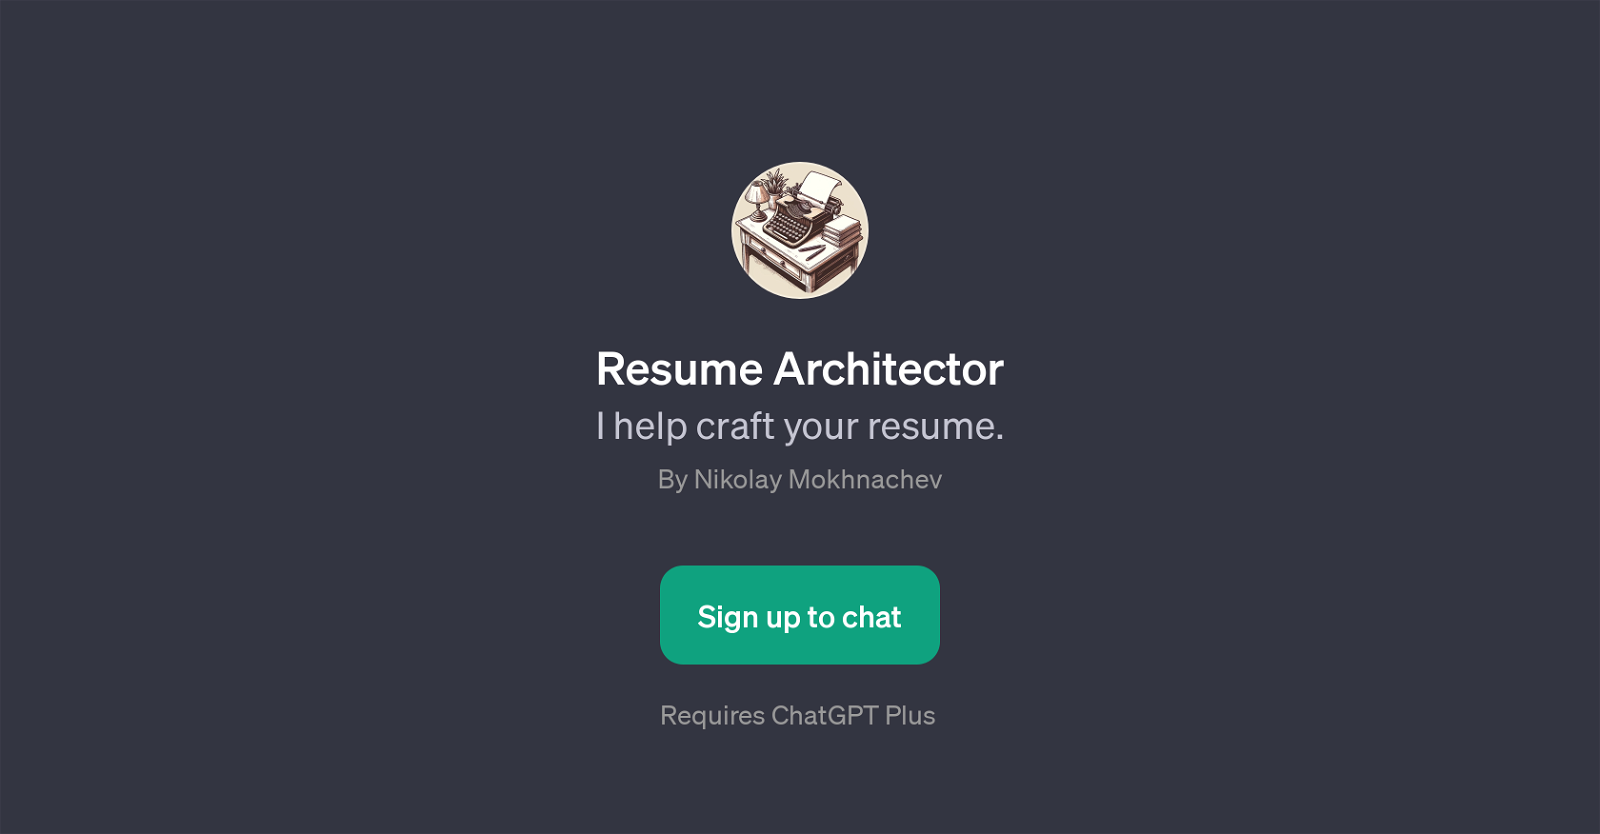 Resume Architector website